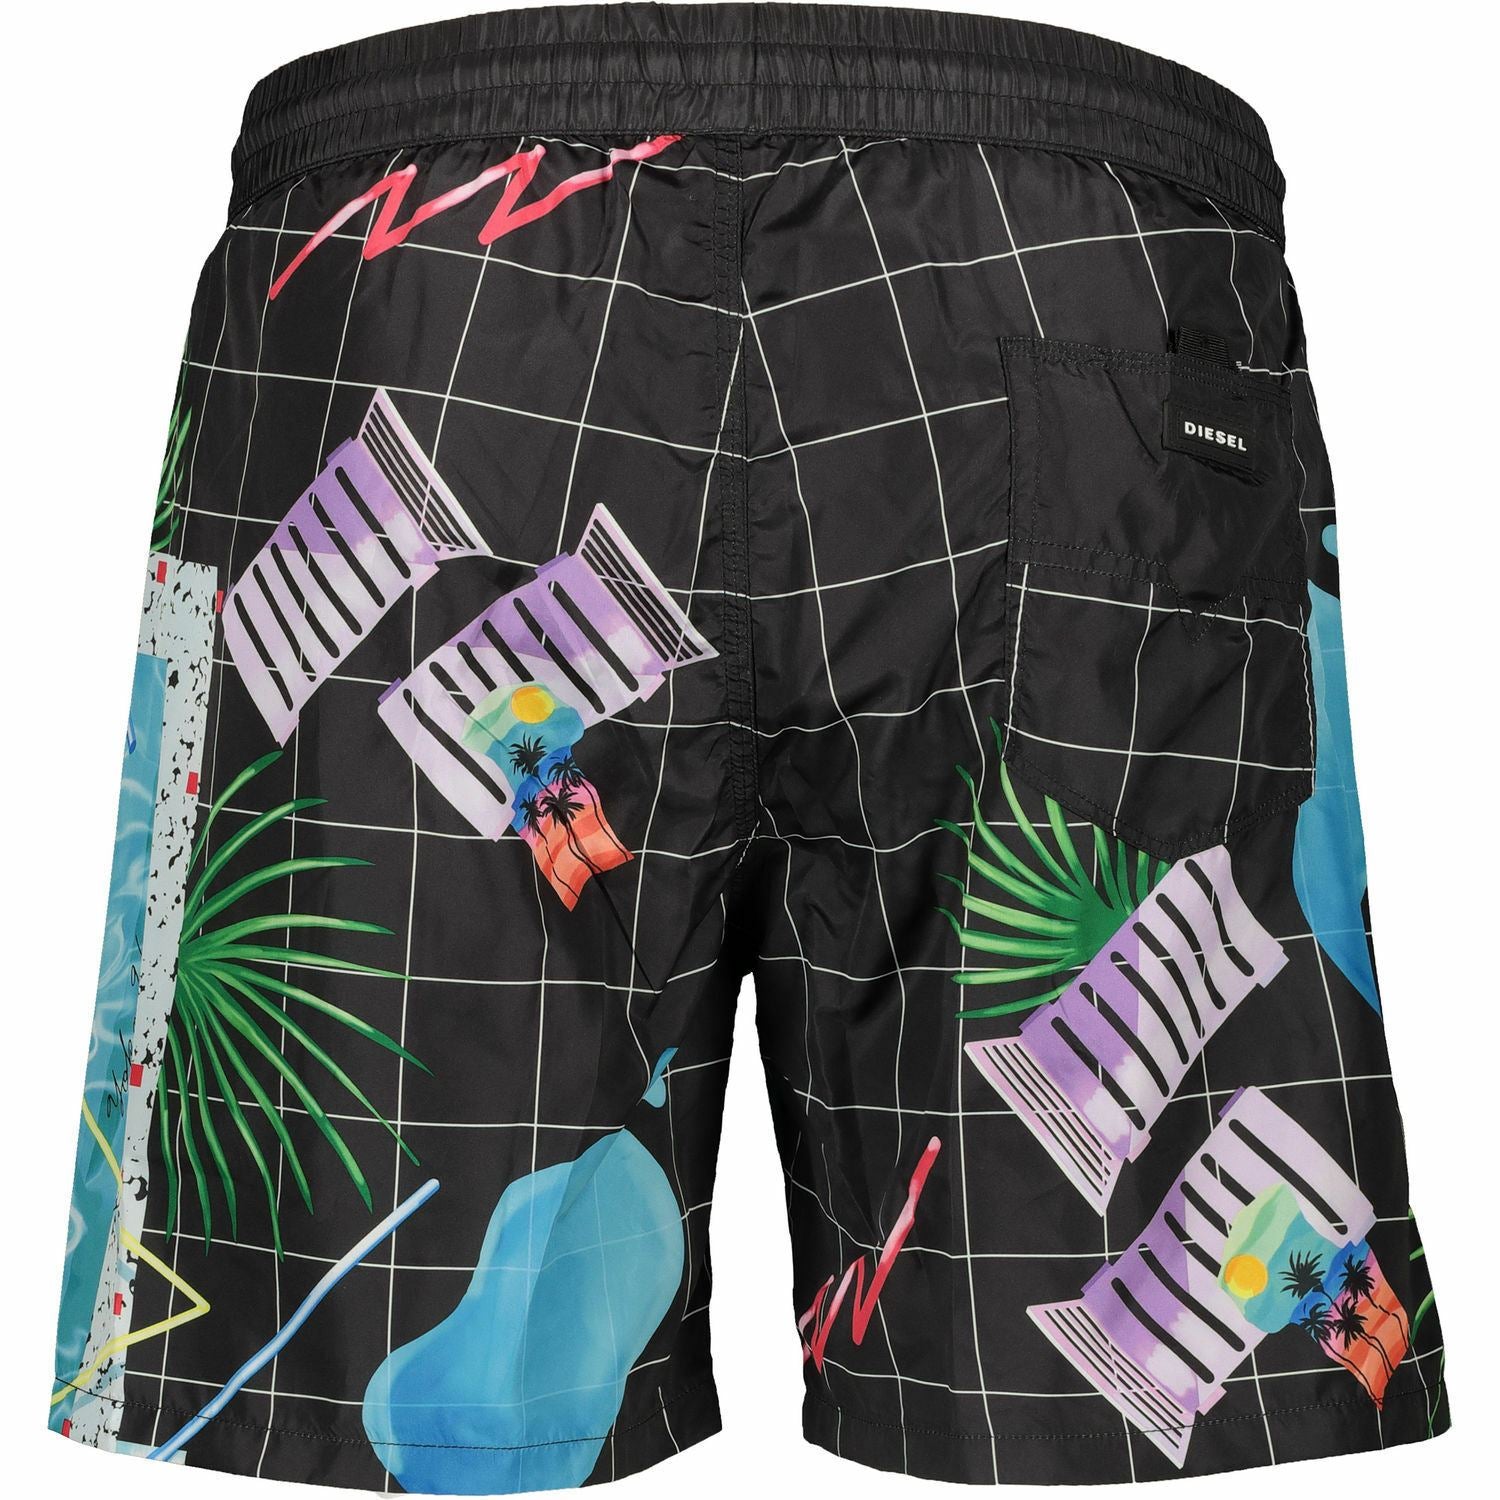 DIESEL Men's Black/Blue Retro Print Swim Shorts Size S Size M Size L Size XL